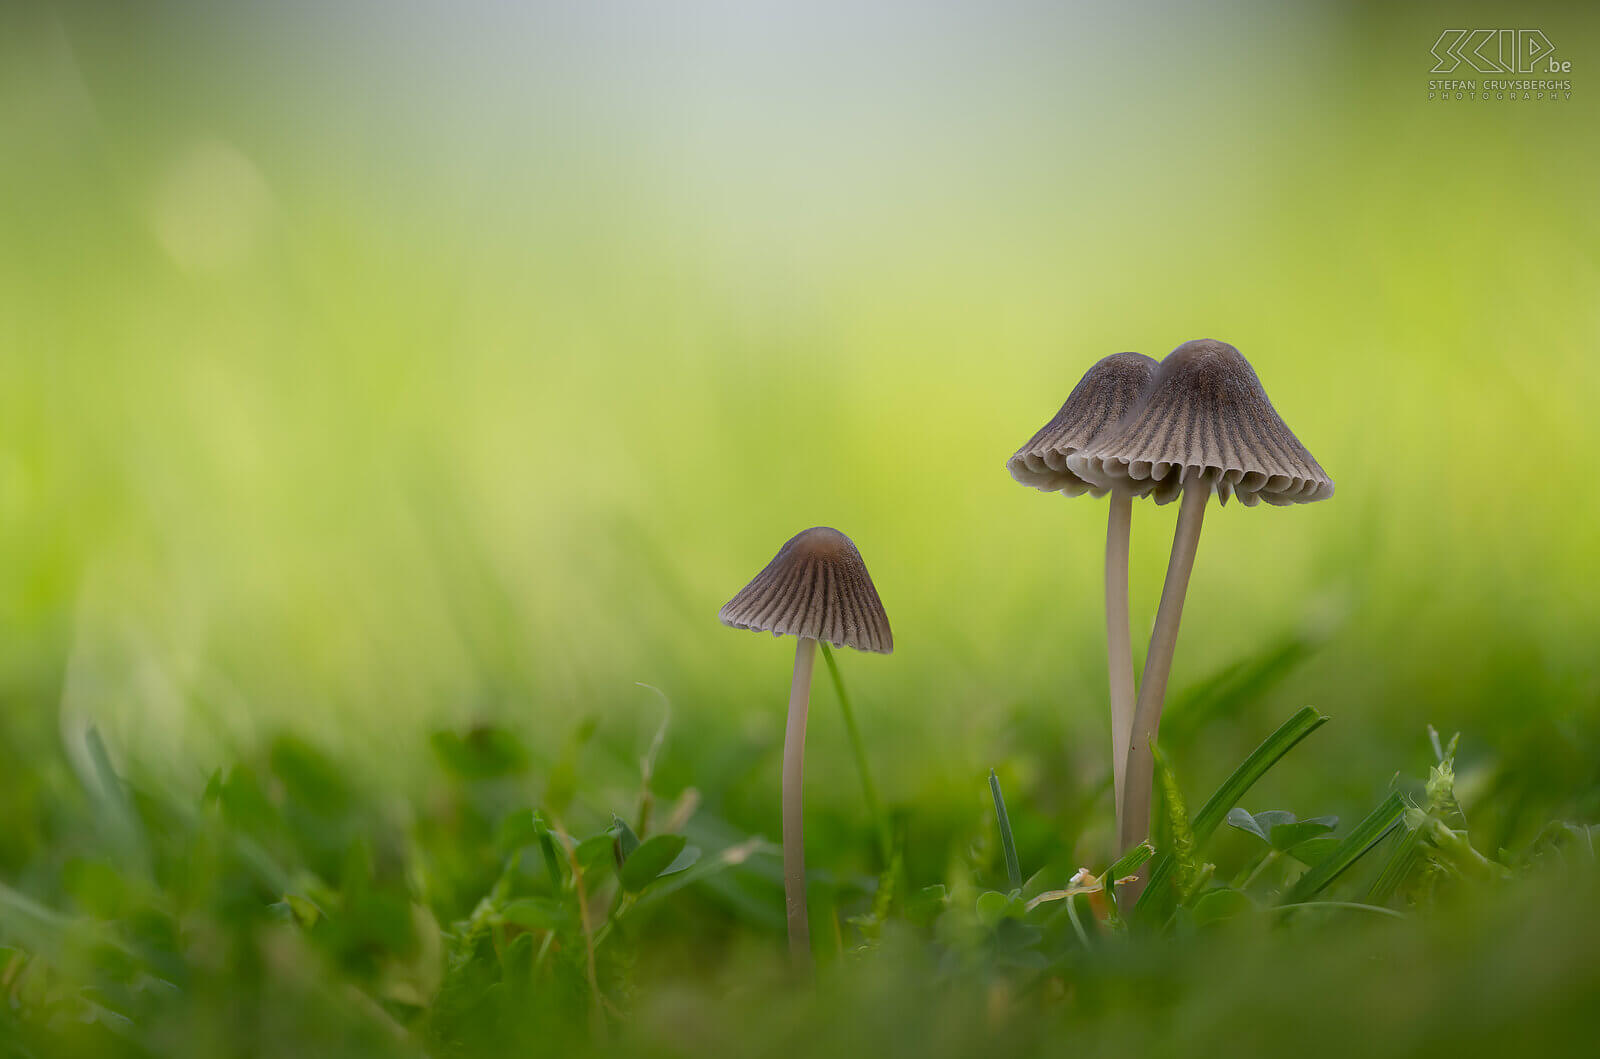 Mushrooms - Nitrous bonnet The beautiful Nitrous bonnet (Mycena leptocephala) mushrooms in our lawn Stefan Cruysberghs